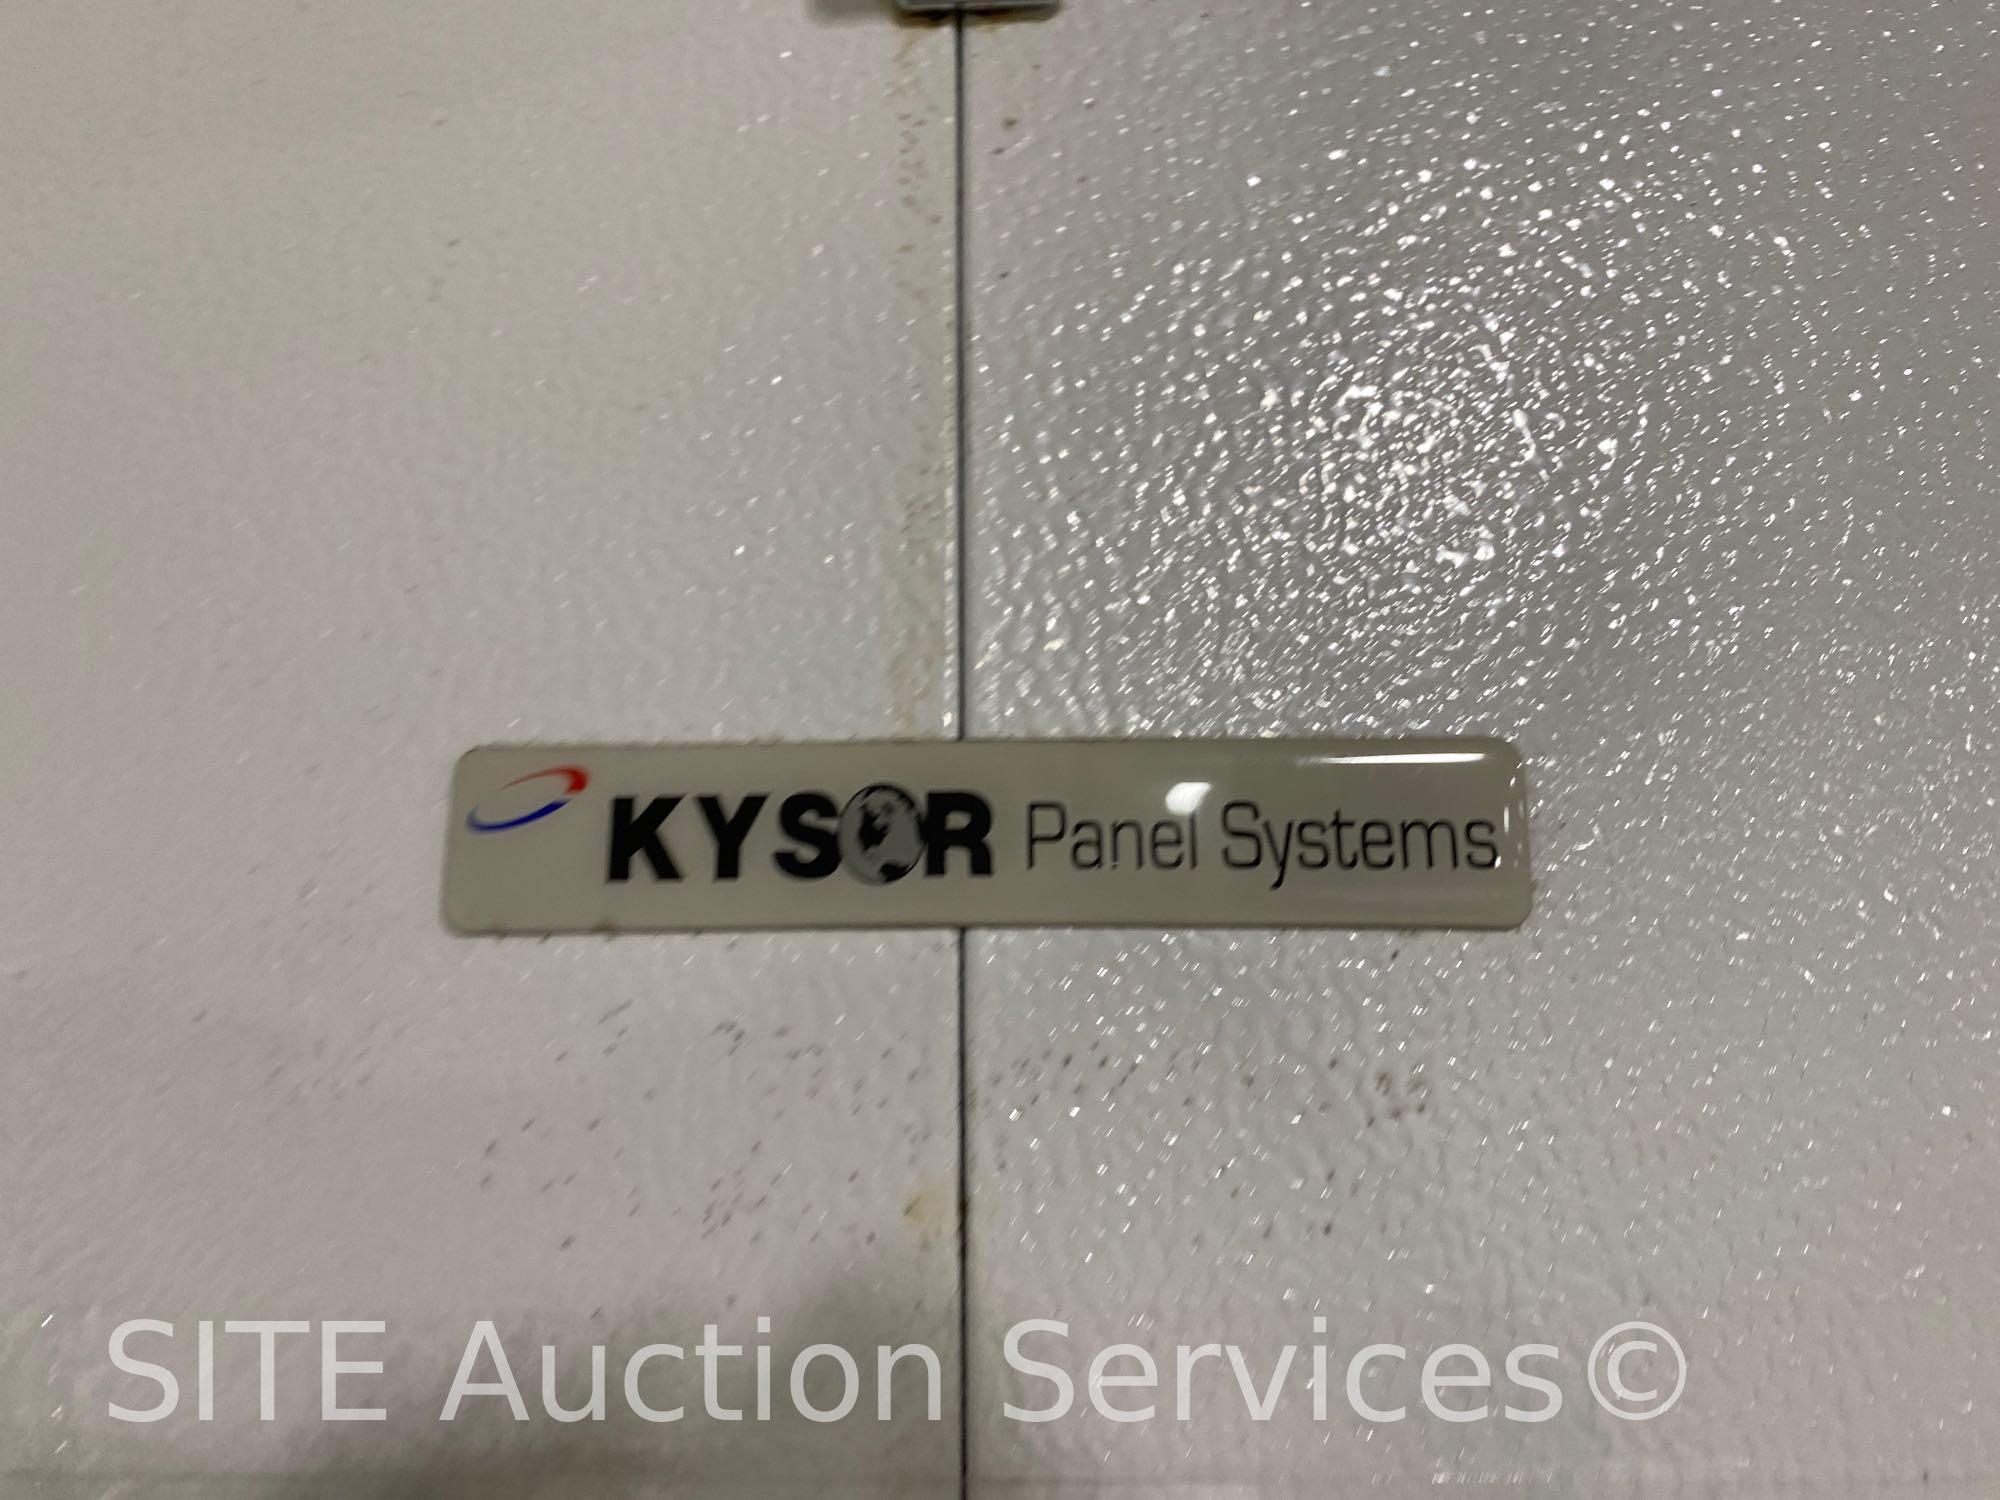 Kyosor 16x20 insulated walk-in refrigerator